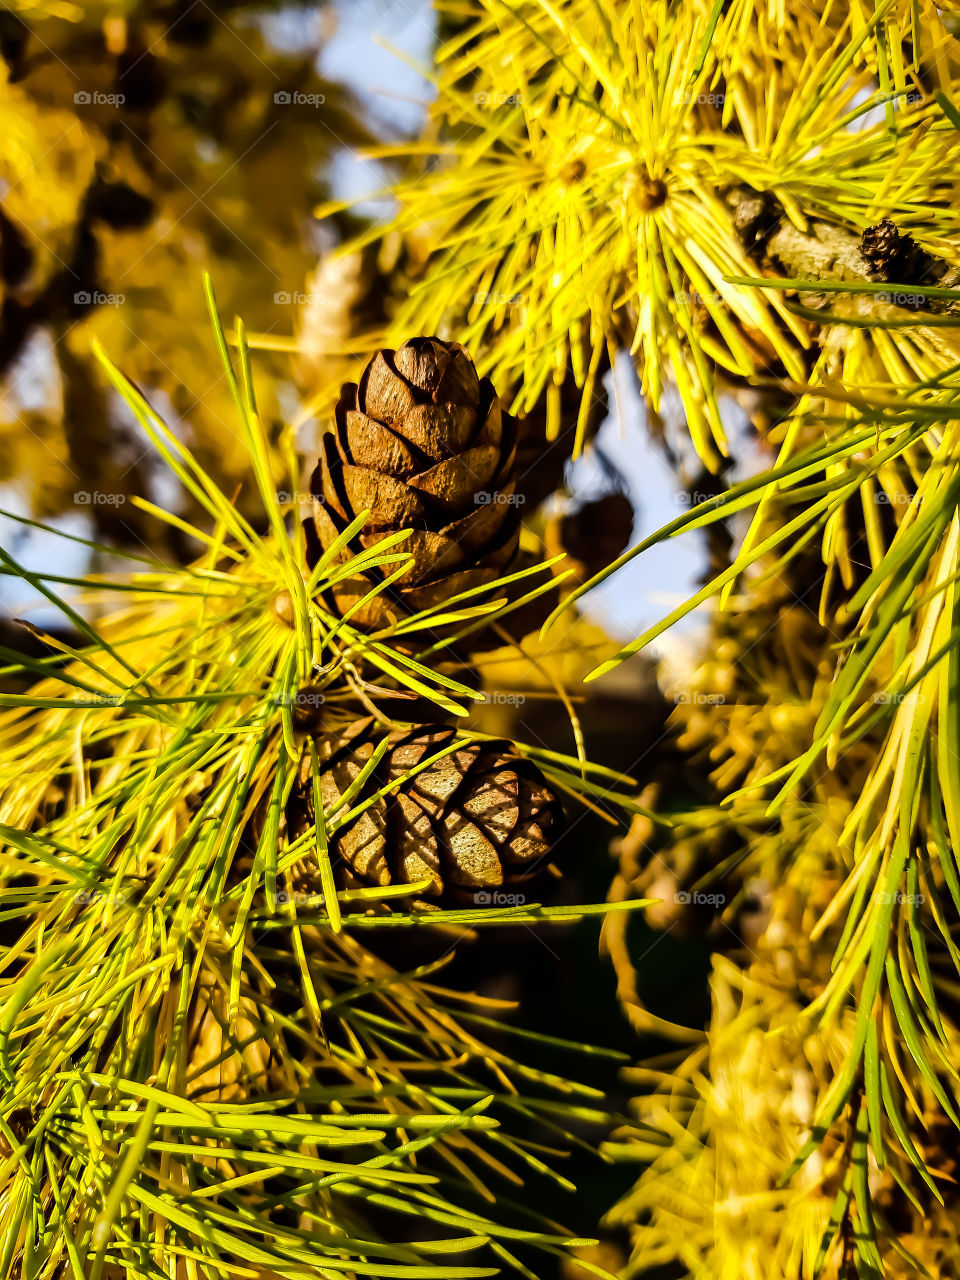 pine with cones in autumn